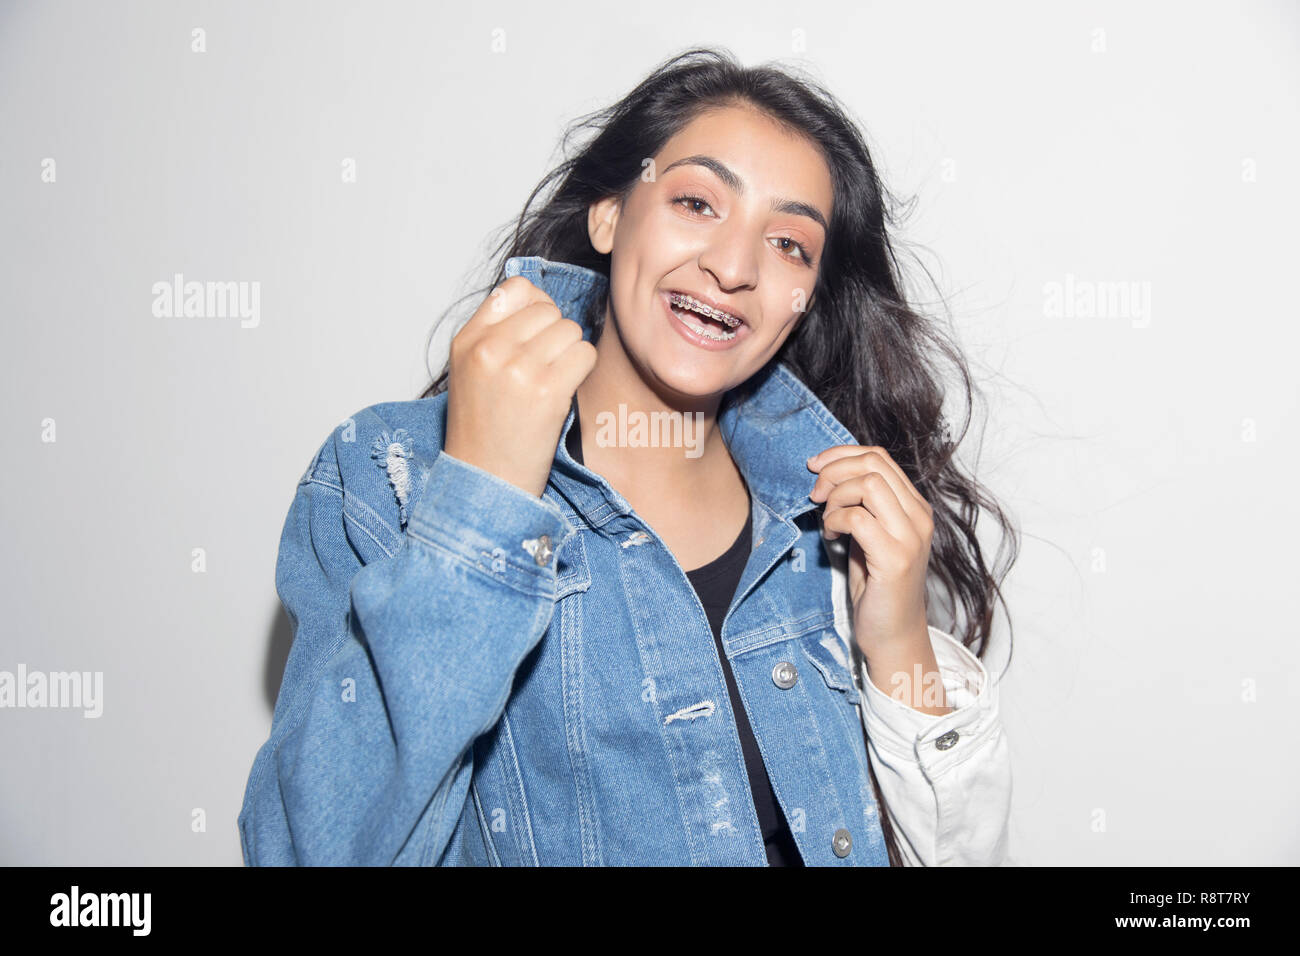 Portrait happy, confident teenage girl with braces wearing denim jacket Stock Photo